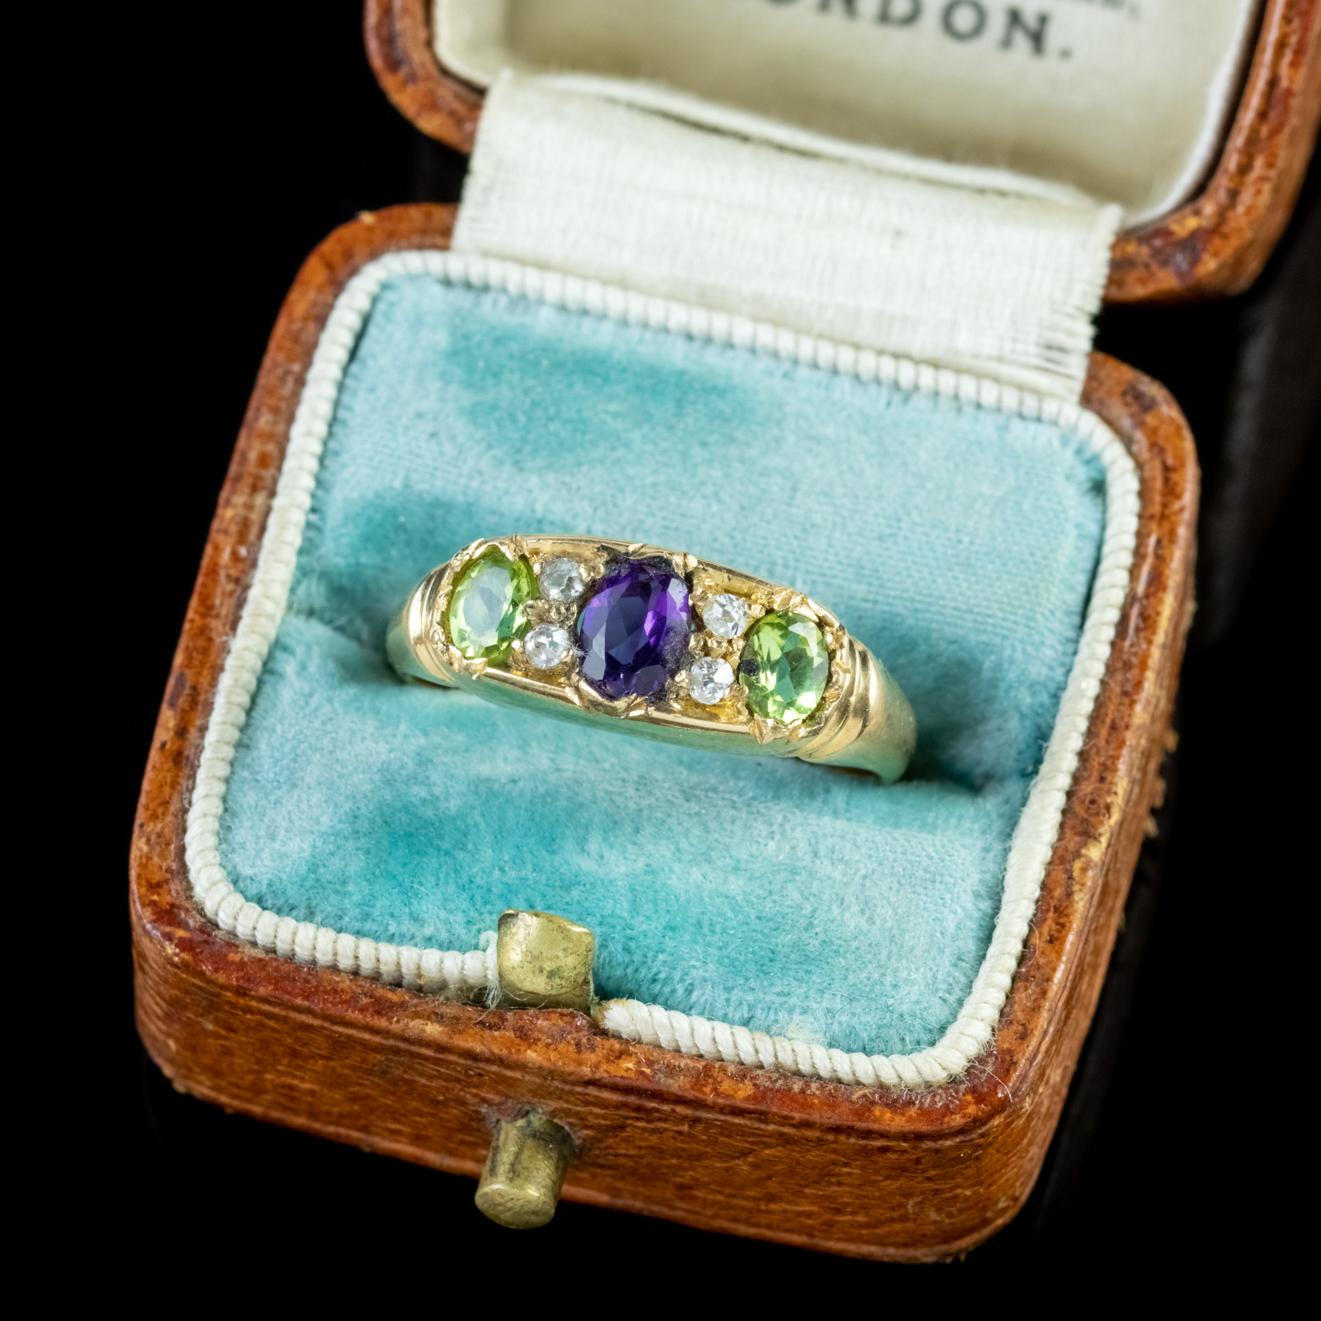 Antique Edwardian Suffragette 18 Carat Gold Dated 1905 Ring For Sale 2